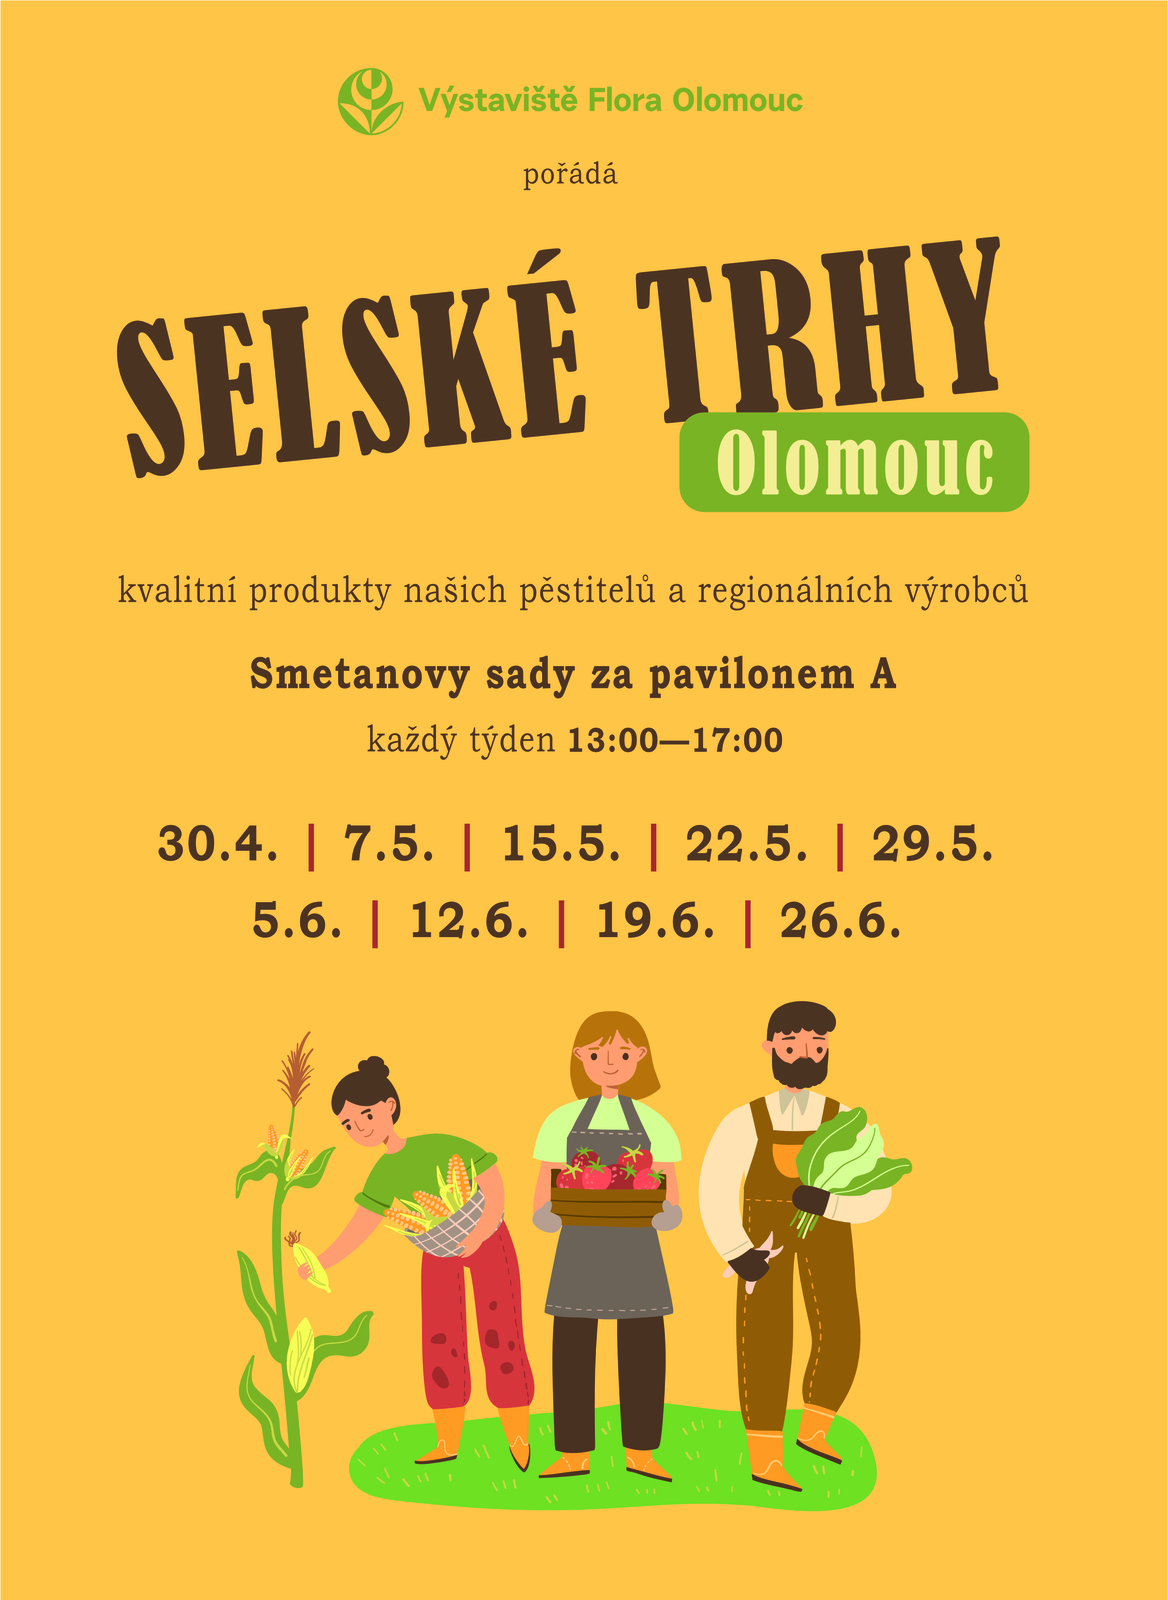 Plakát Selské trhy Olomouc.jpg